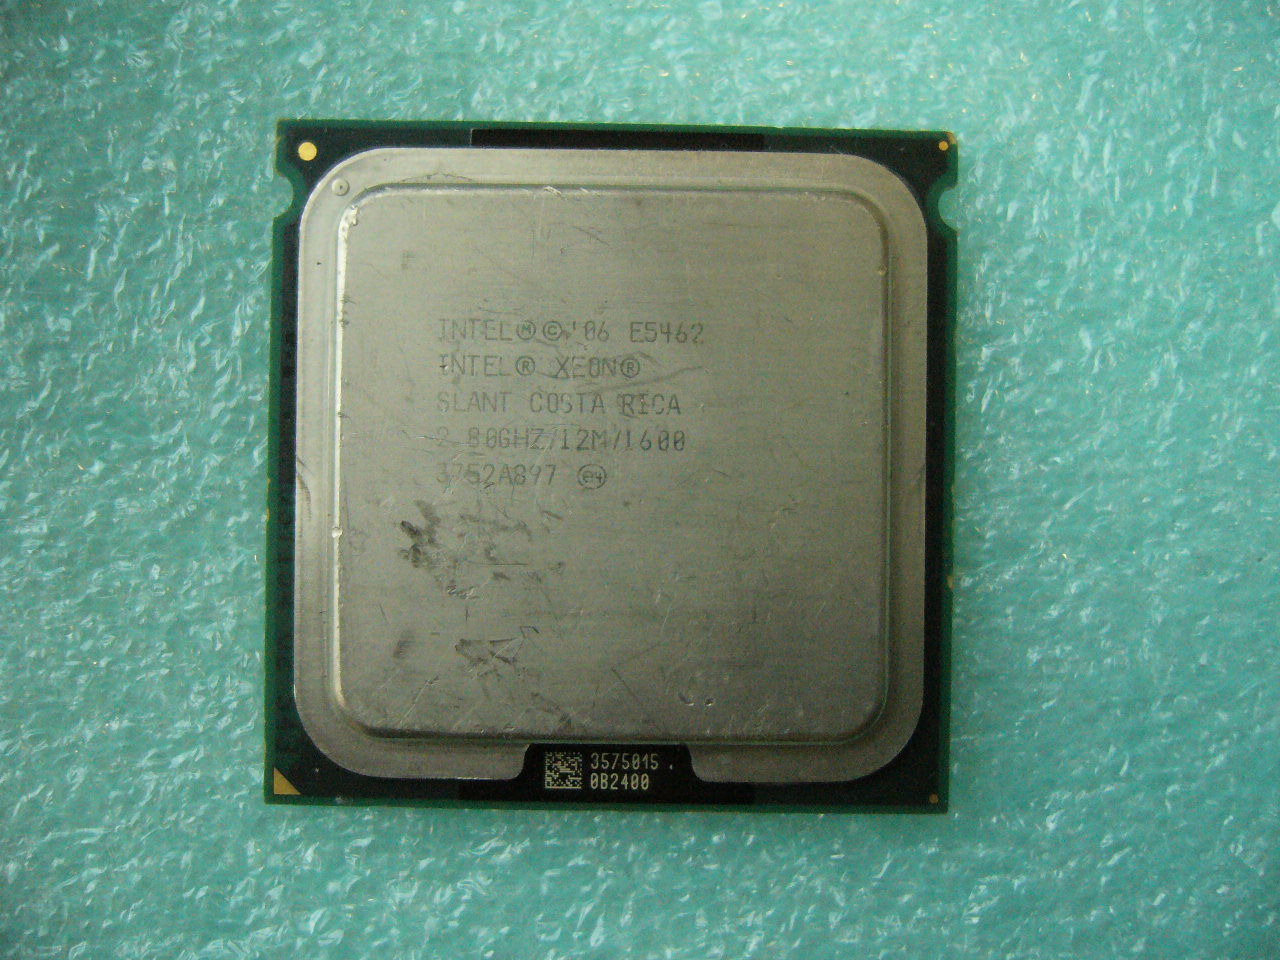 QTY 1x Intel Xeon CPU Quad Core E5462 2.8Ghz/12MB/1600Mhz LGA771 SLANT